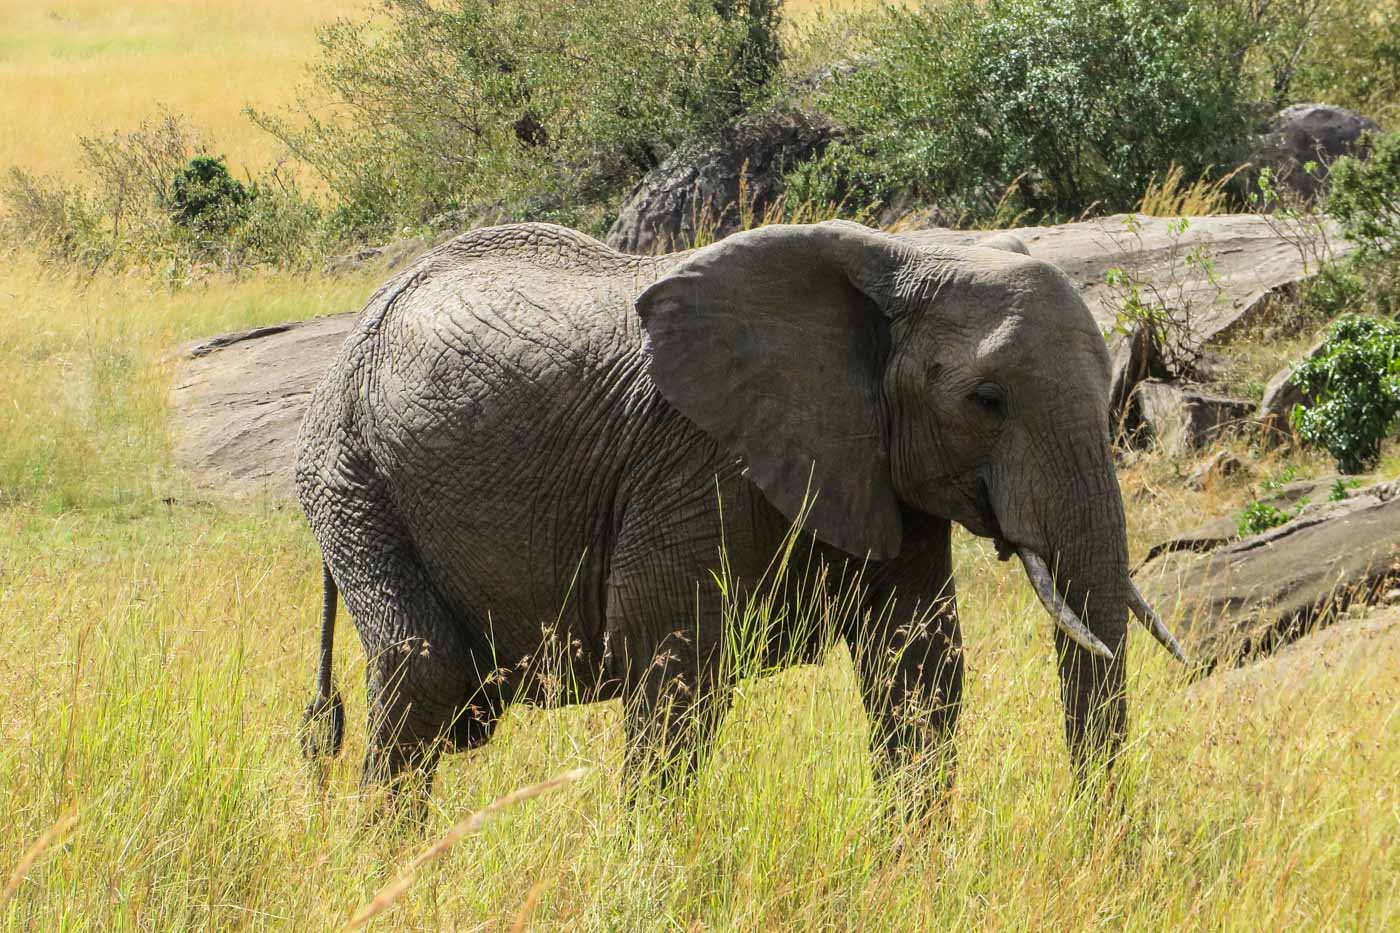 An elephant alone in the savana